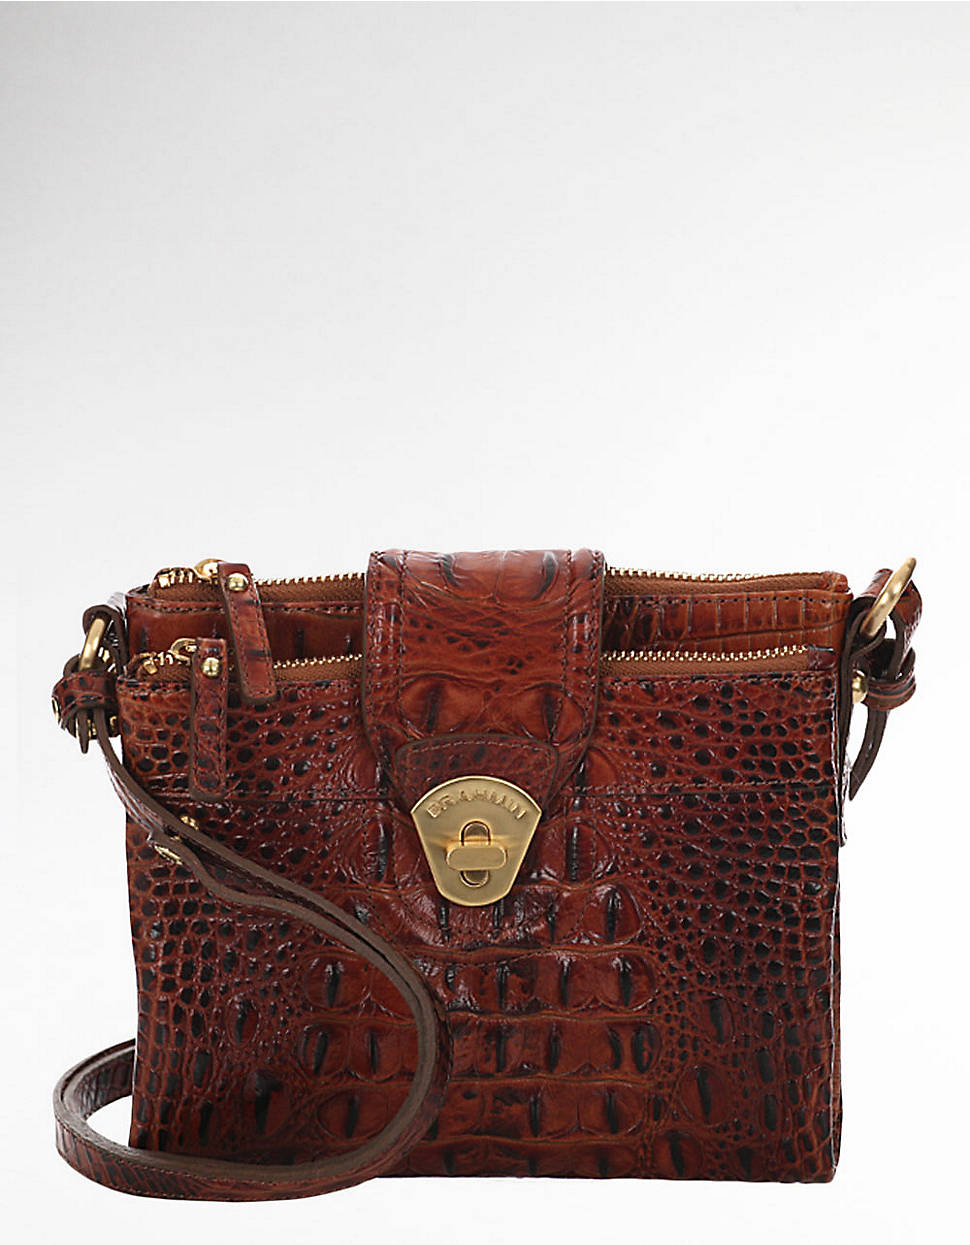 Red Brahmin Handbags & Luggage :: Keweenaw Bay Indian Community